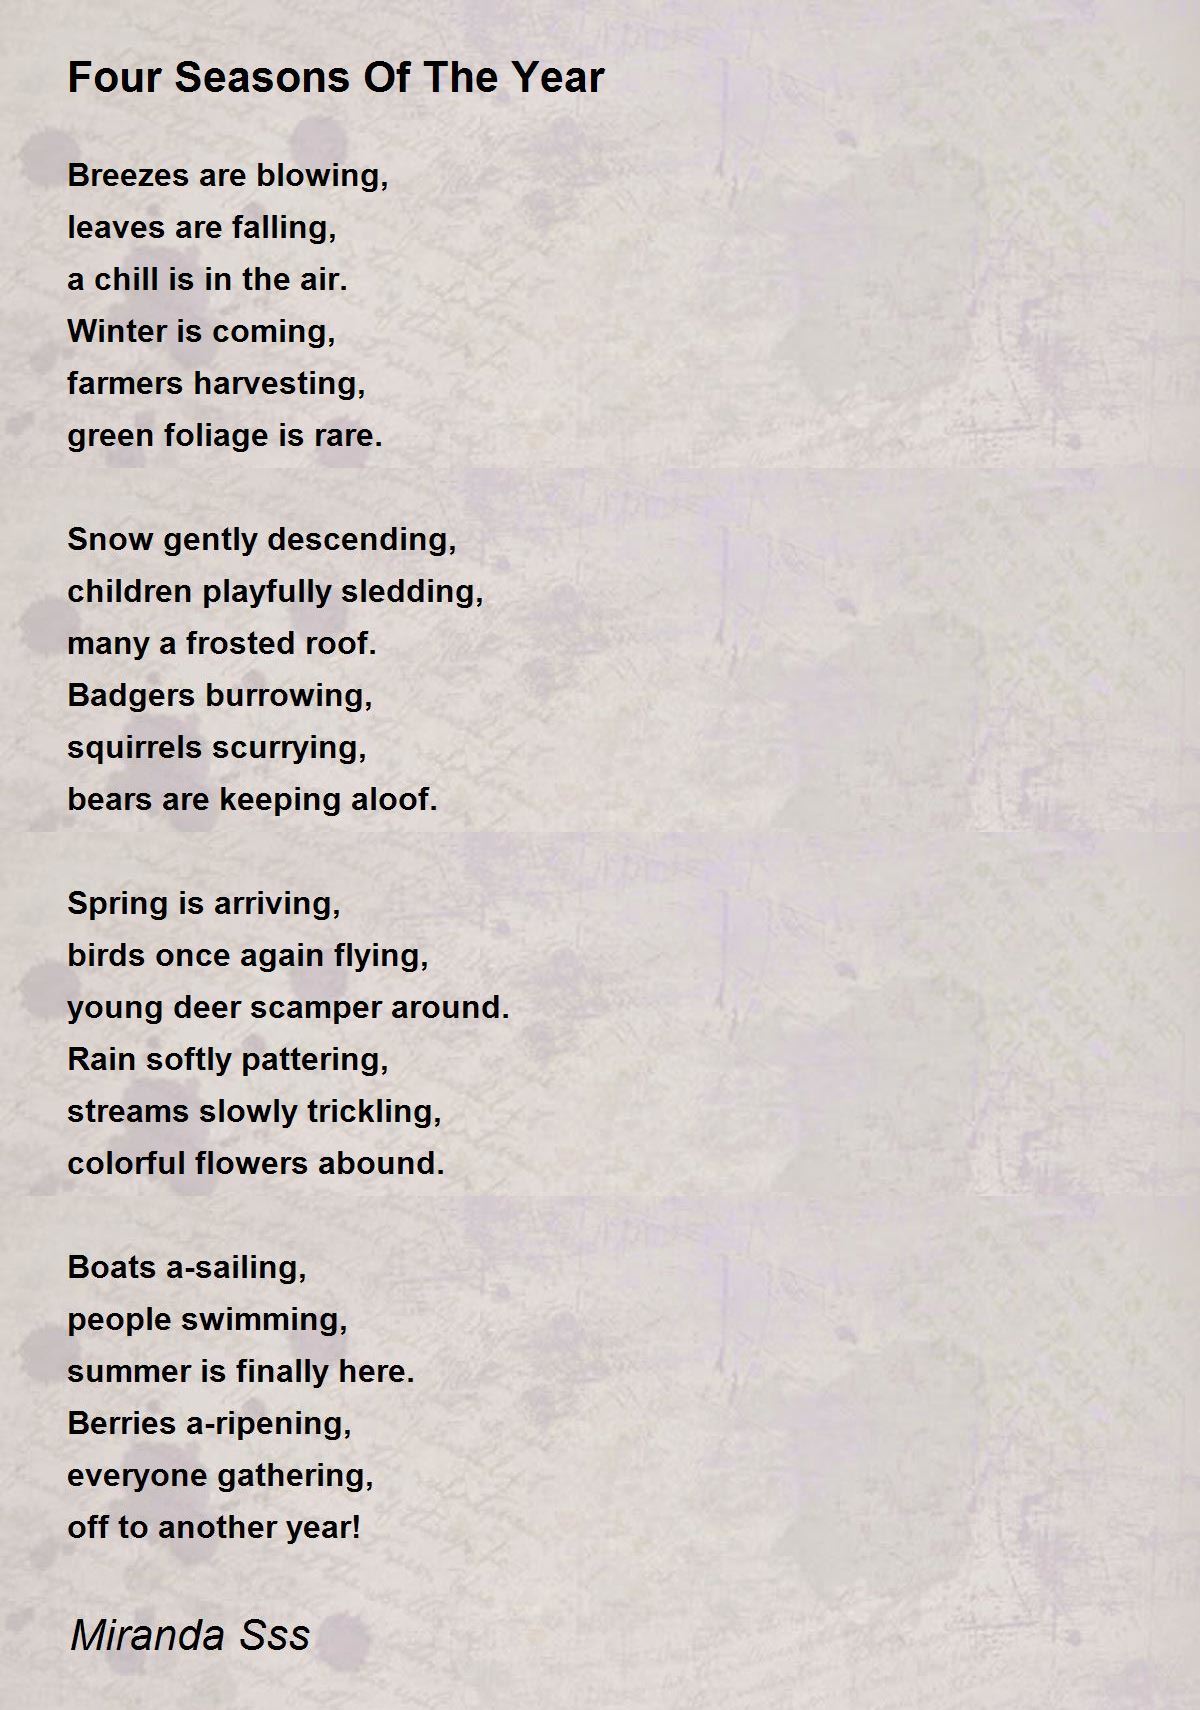 Four Seasons Of The Year Poem by Miranda Sss - Poem Hunter